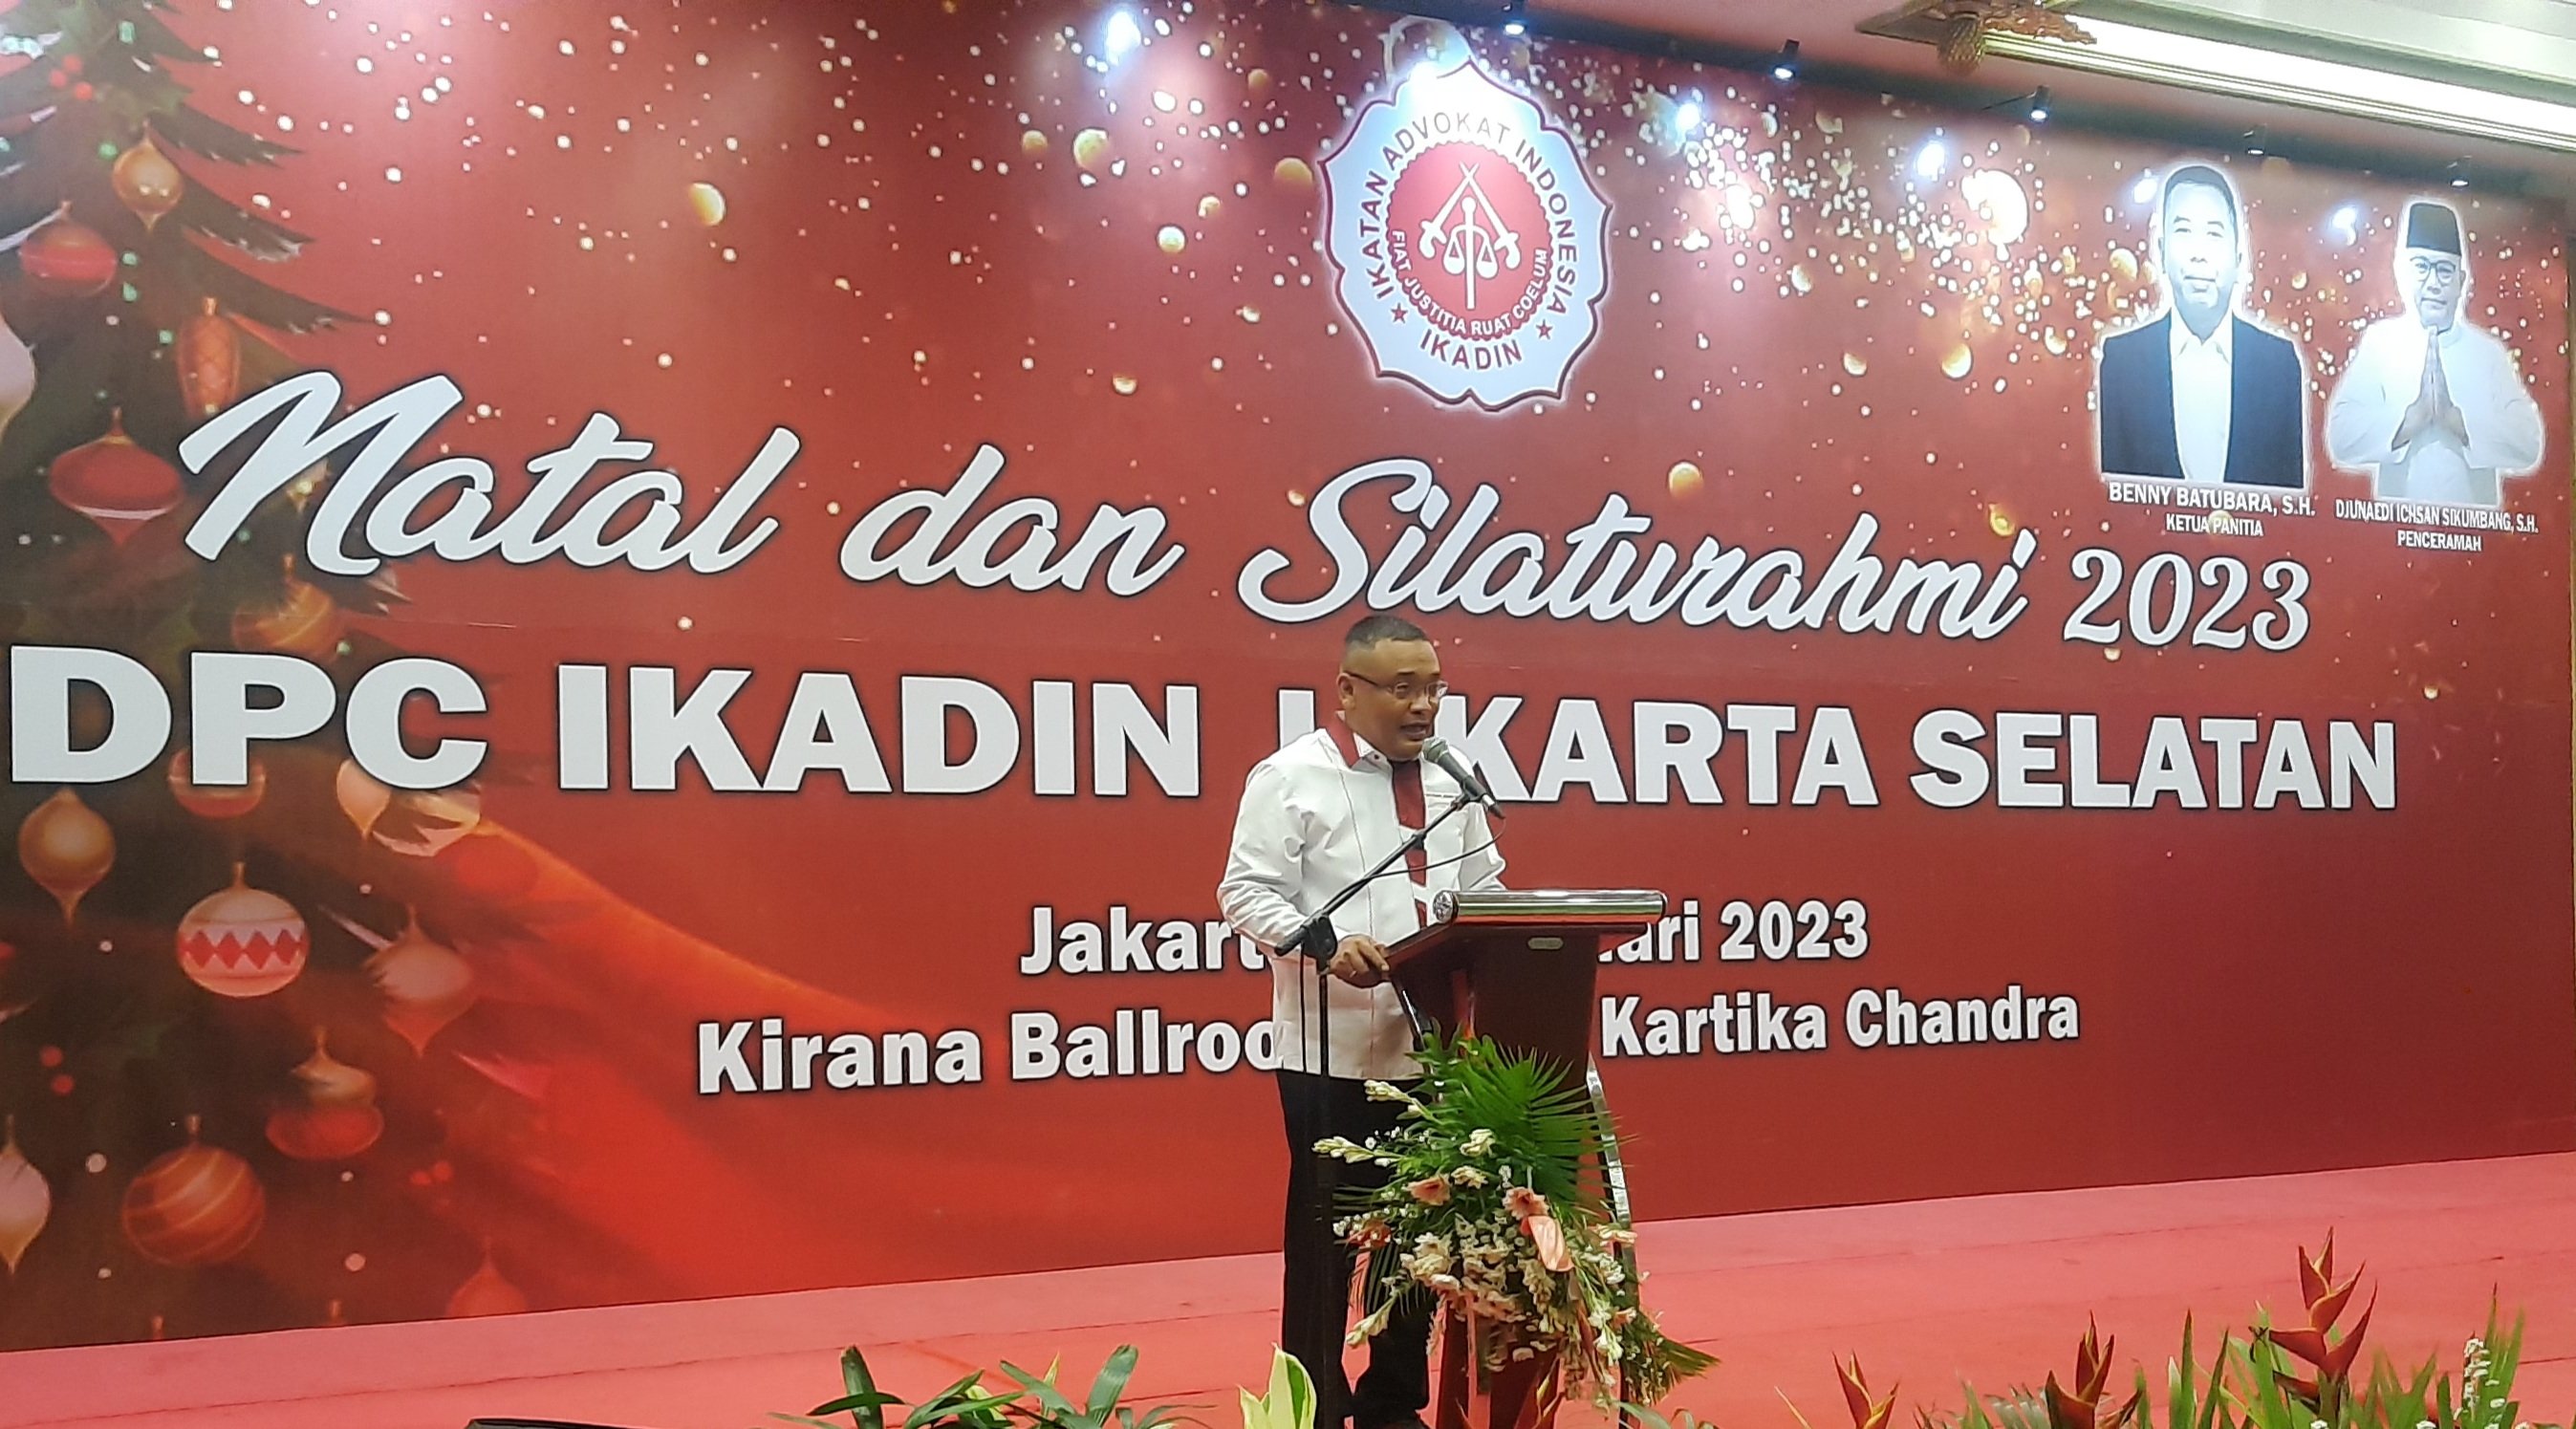 Ketua DPC IKADIN Jakarta Selatan, Bontor O.L Tobing